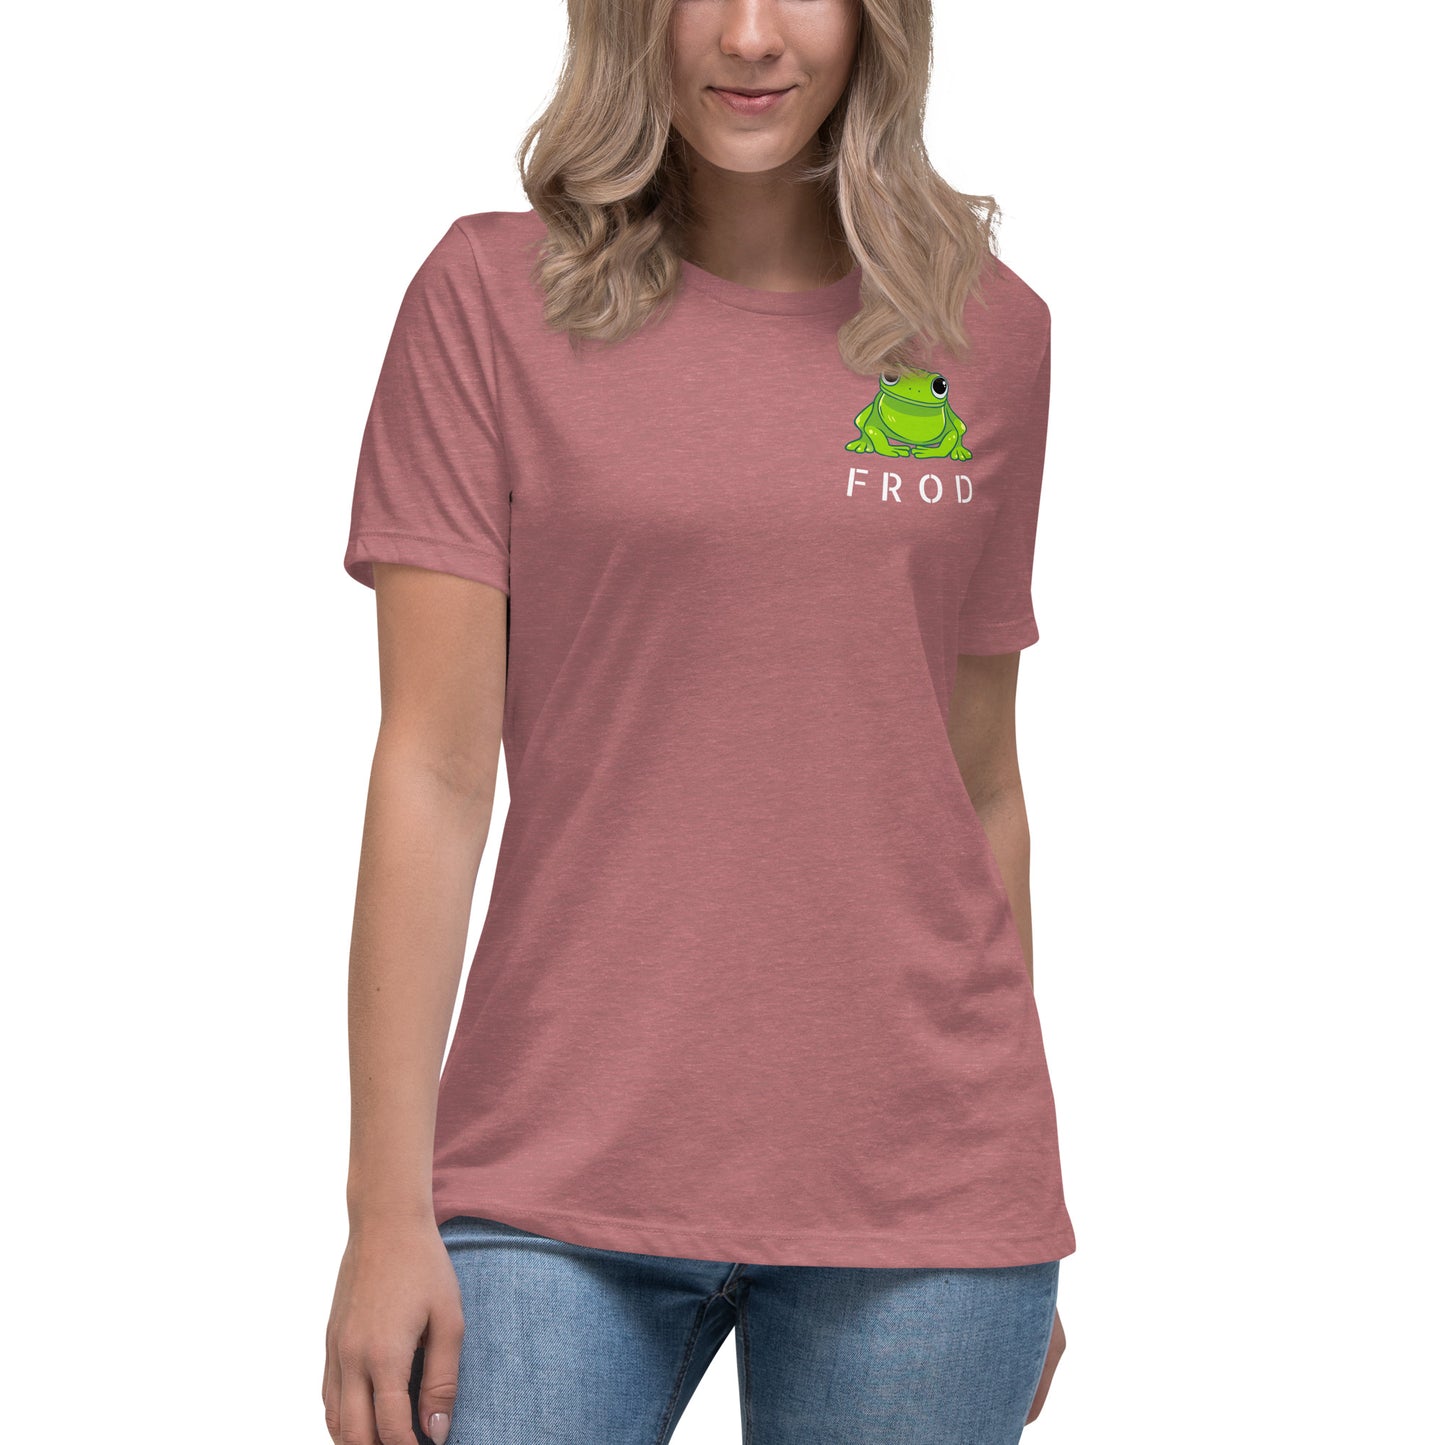 Classic Frod - Women's Relaxed T-Shirt